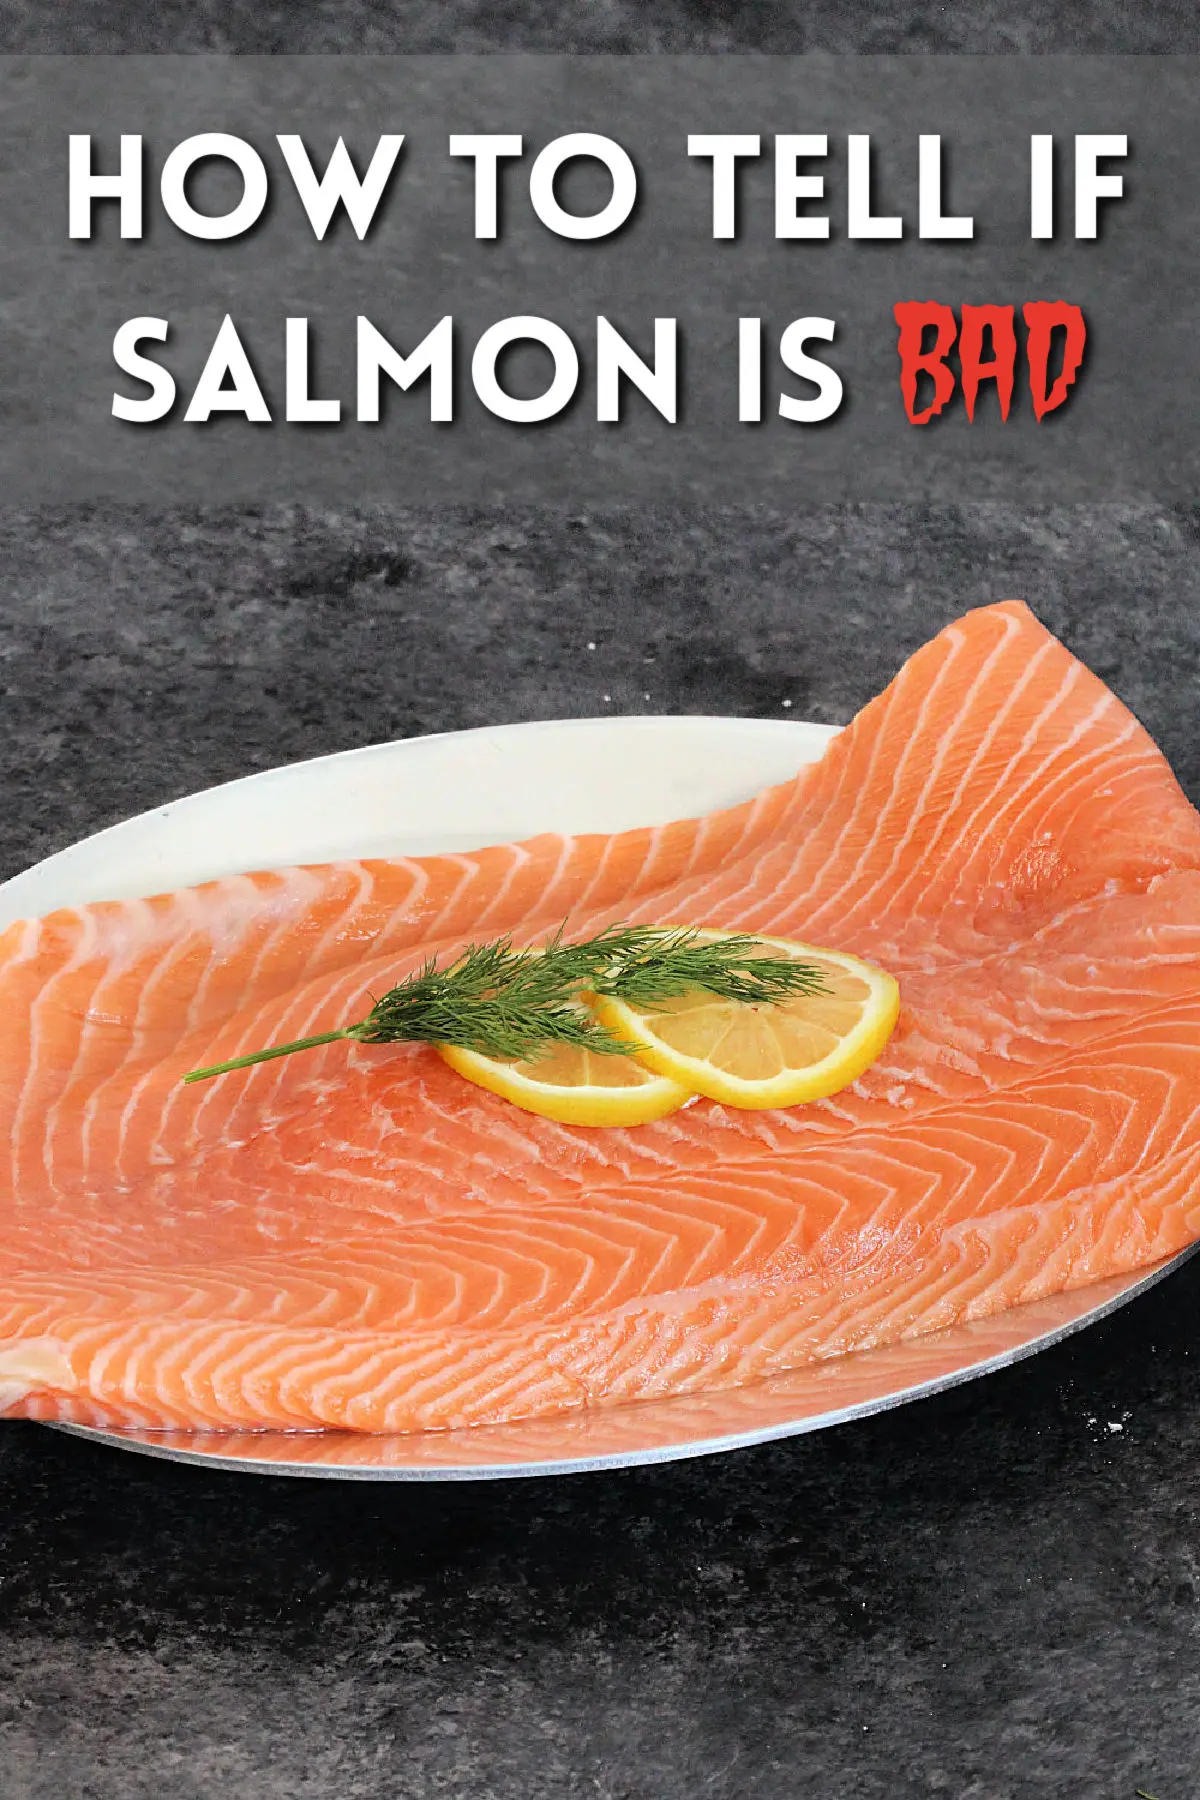 smoked salmon makes me sick - Why do I feel sick after eating smoked salmon